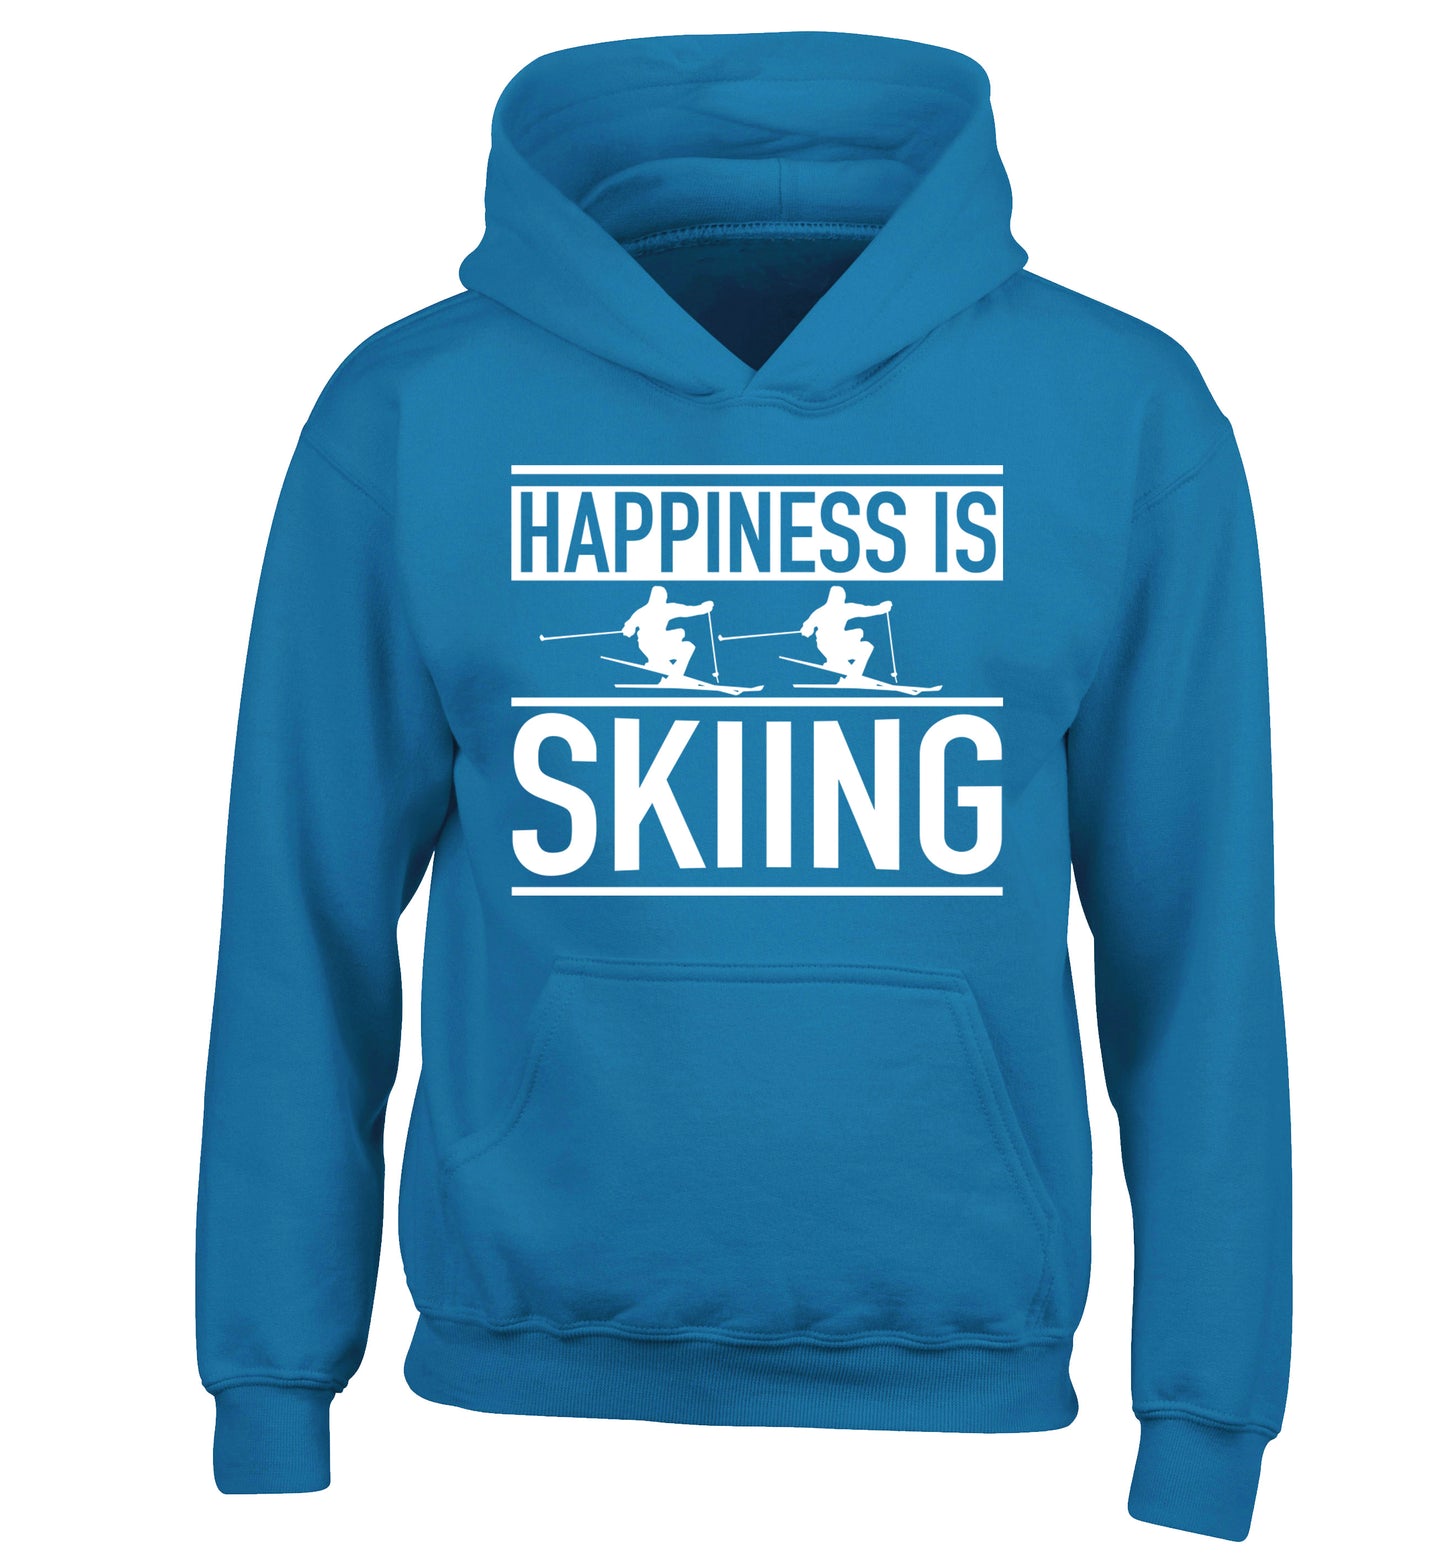 Happiness is skiing children's blue hoodie 12-14 Years